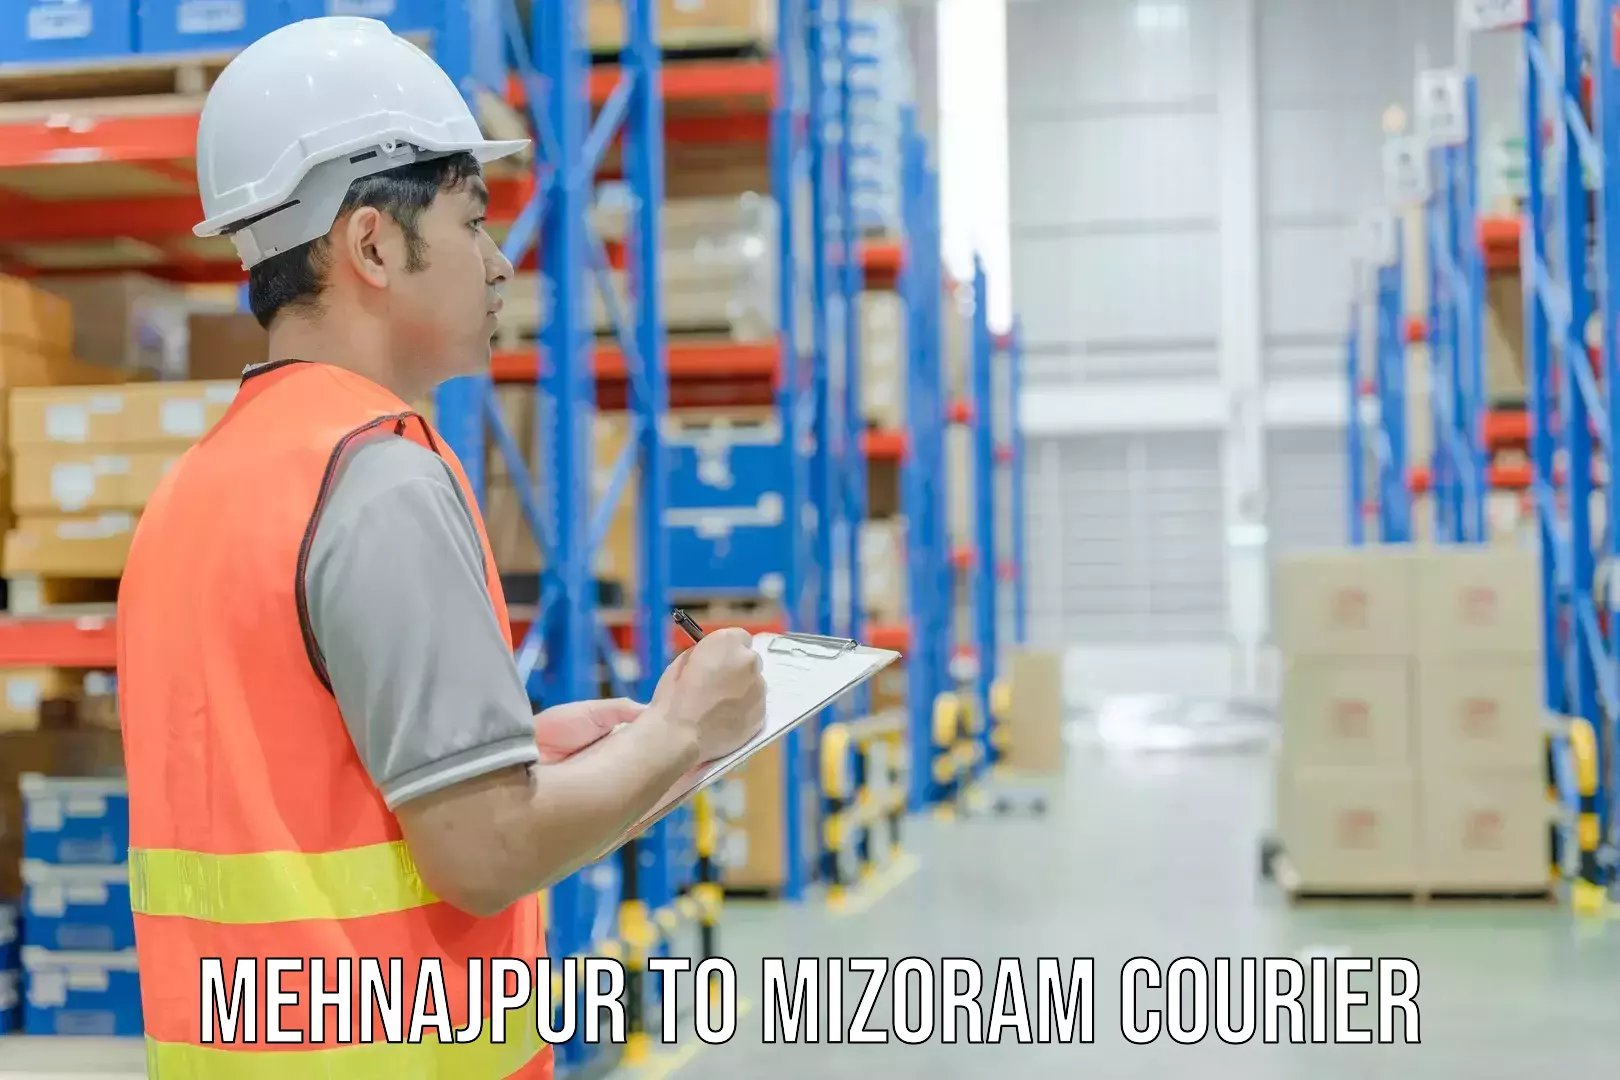 High-priority parcel service Mehnajpur to Mizoram